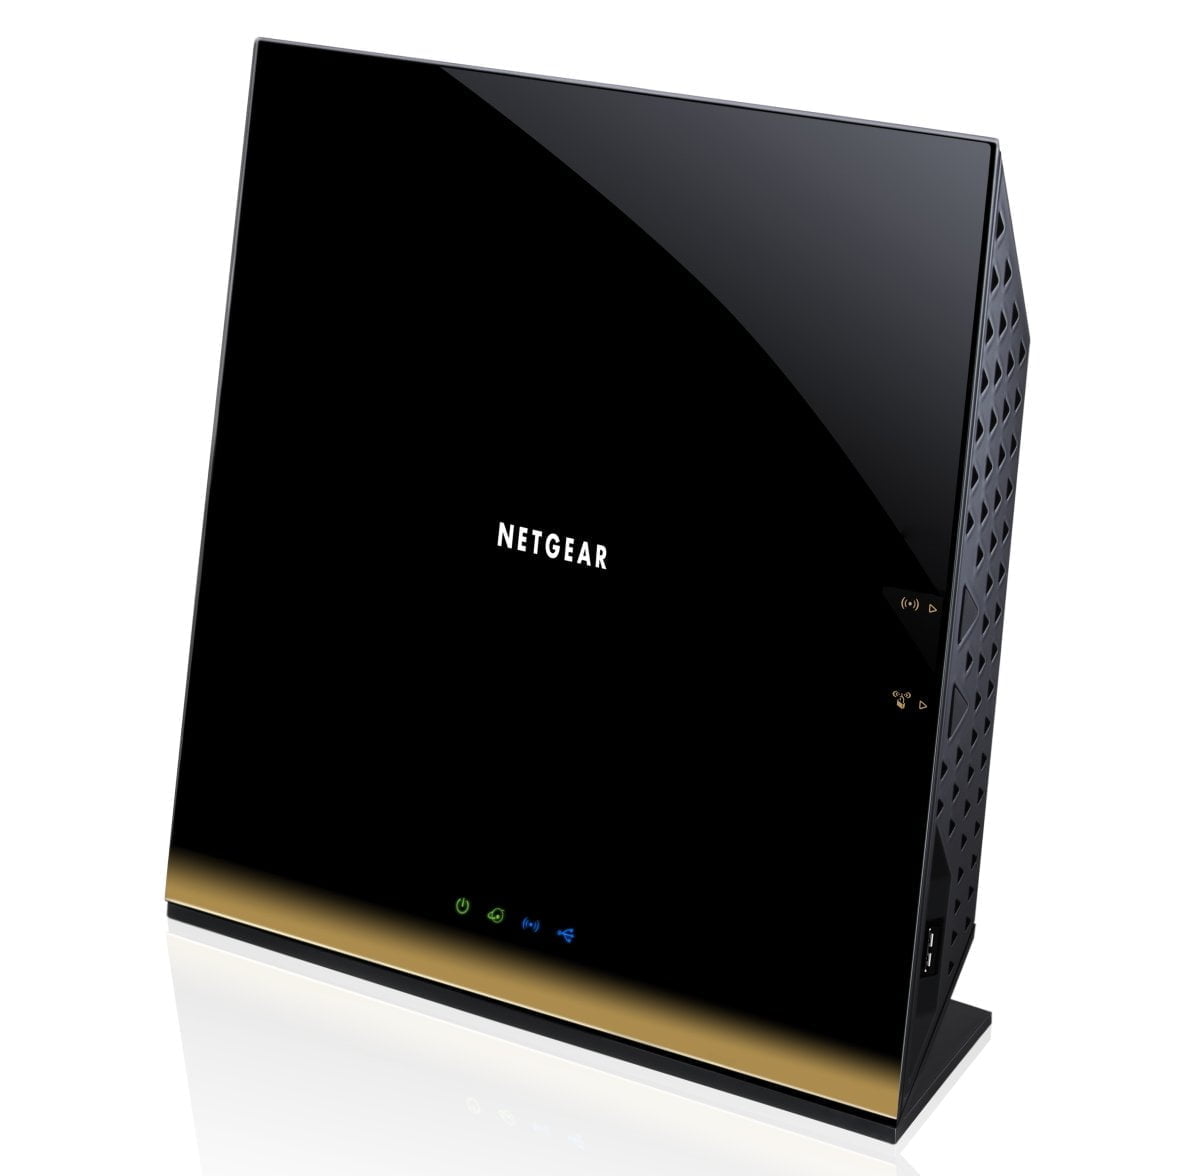 Review: Netgear R6300 router 6